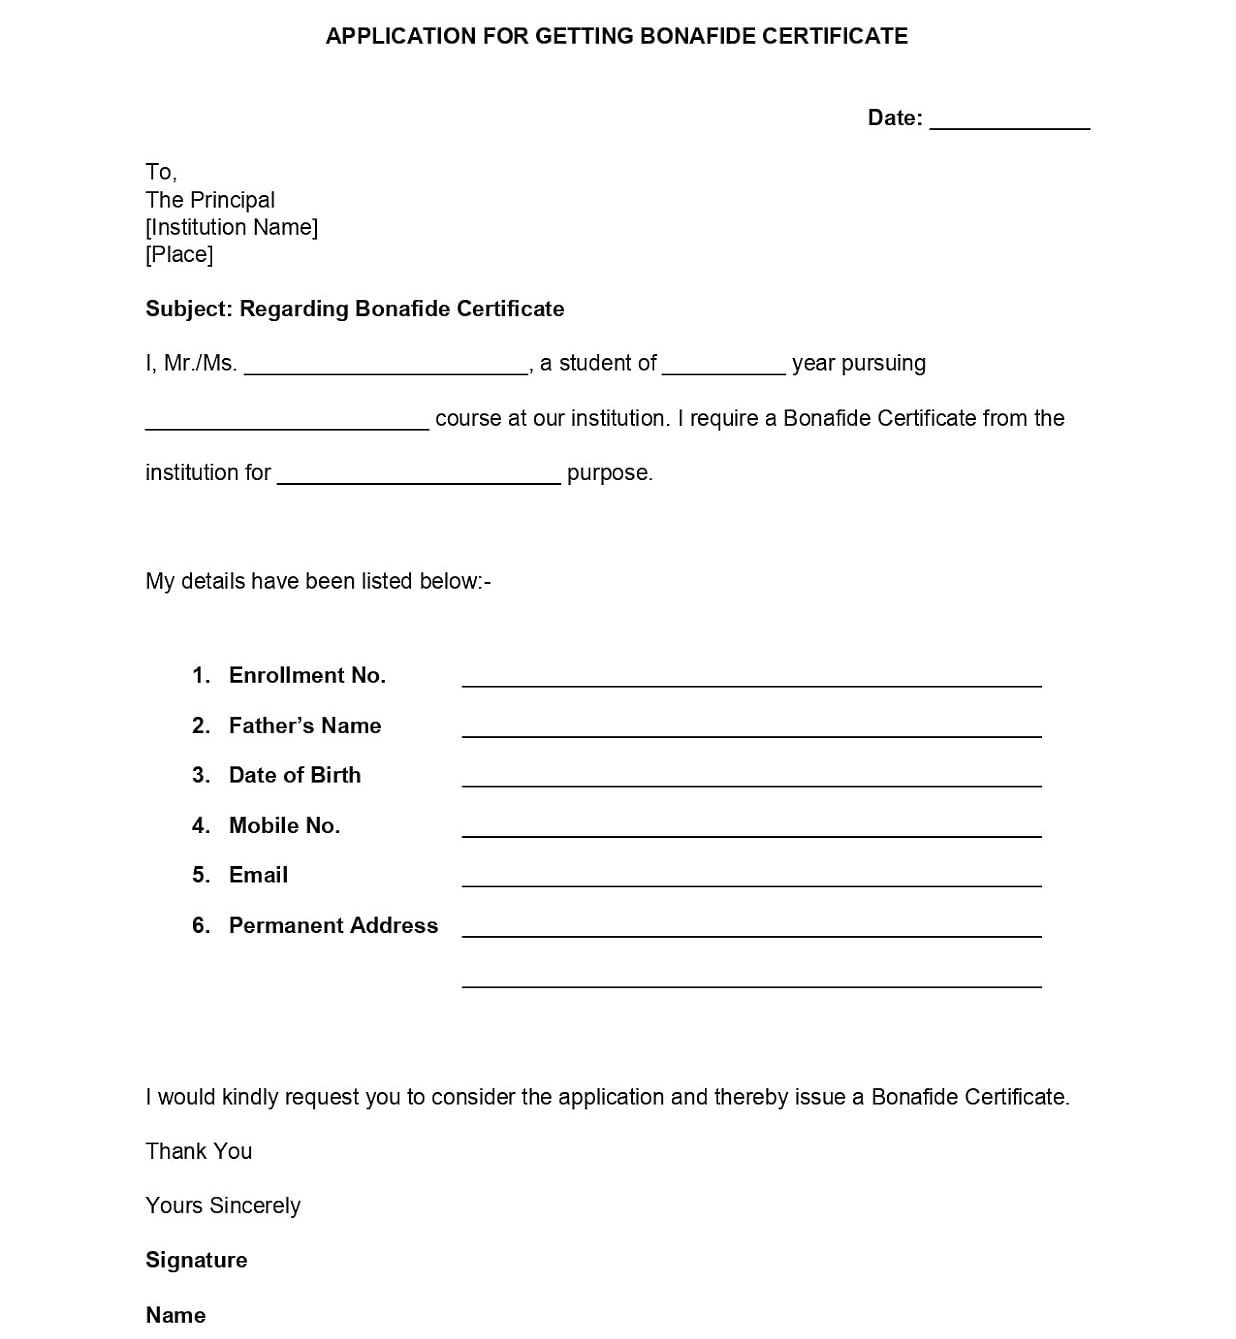 bonafide certificate application form format for students